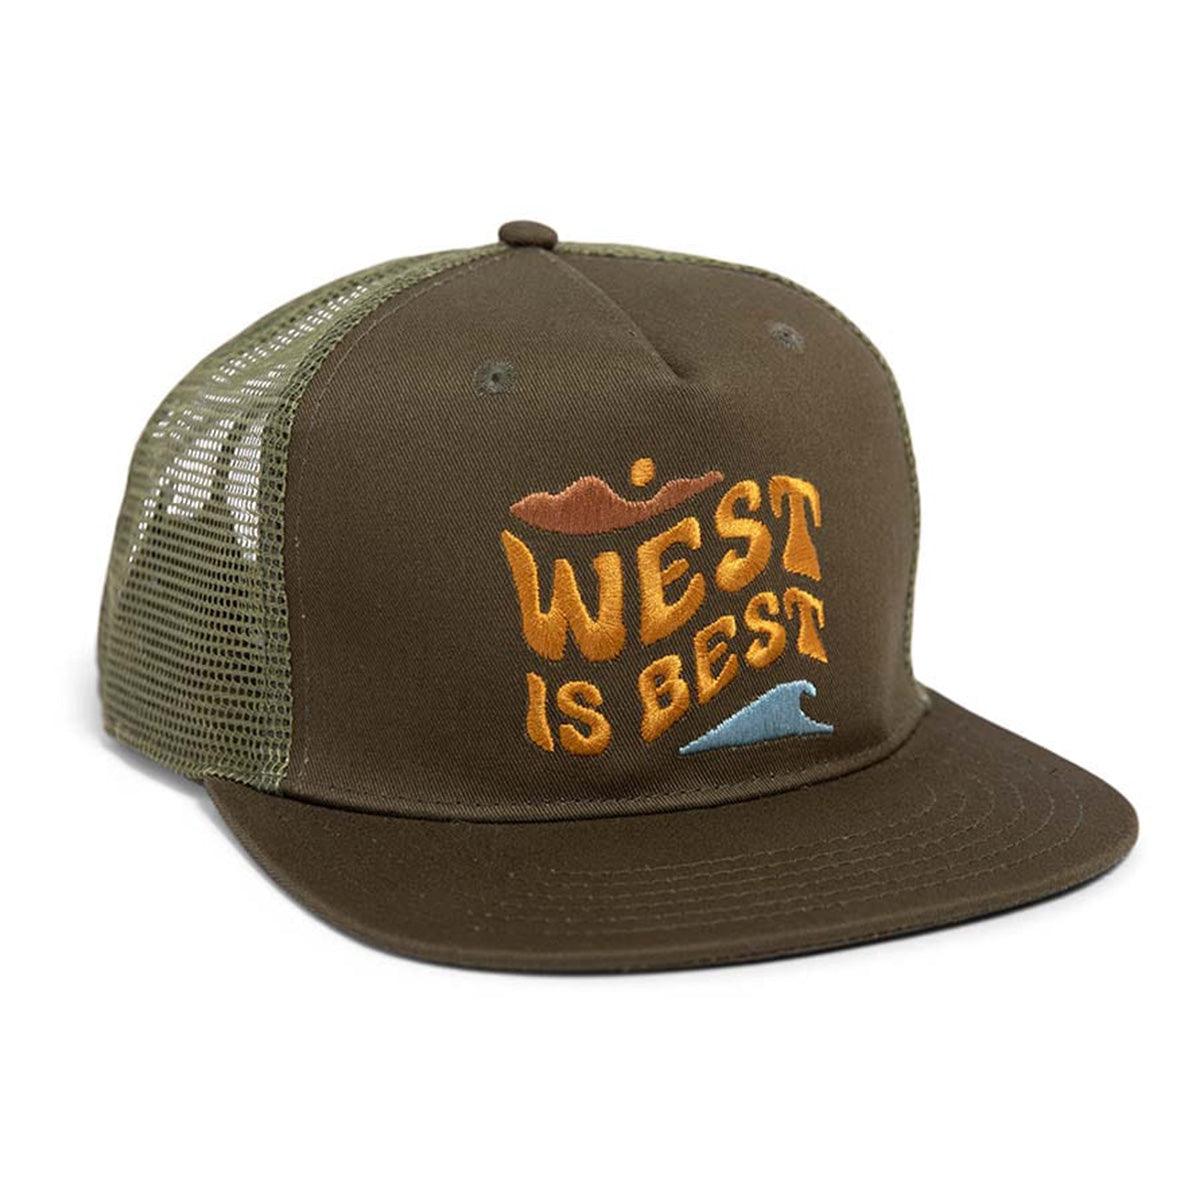 West Is Best Hat - undefined - Trek Light